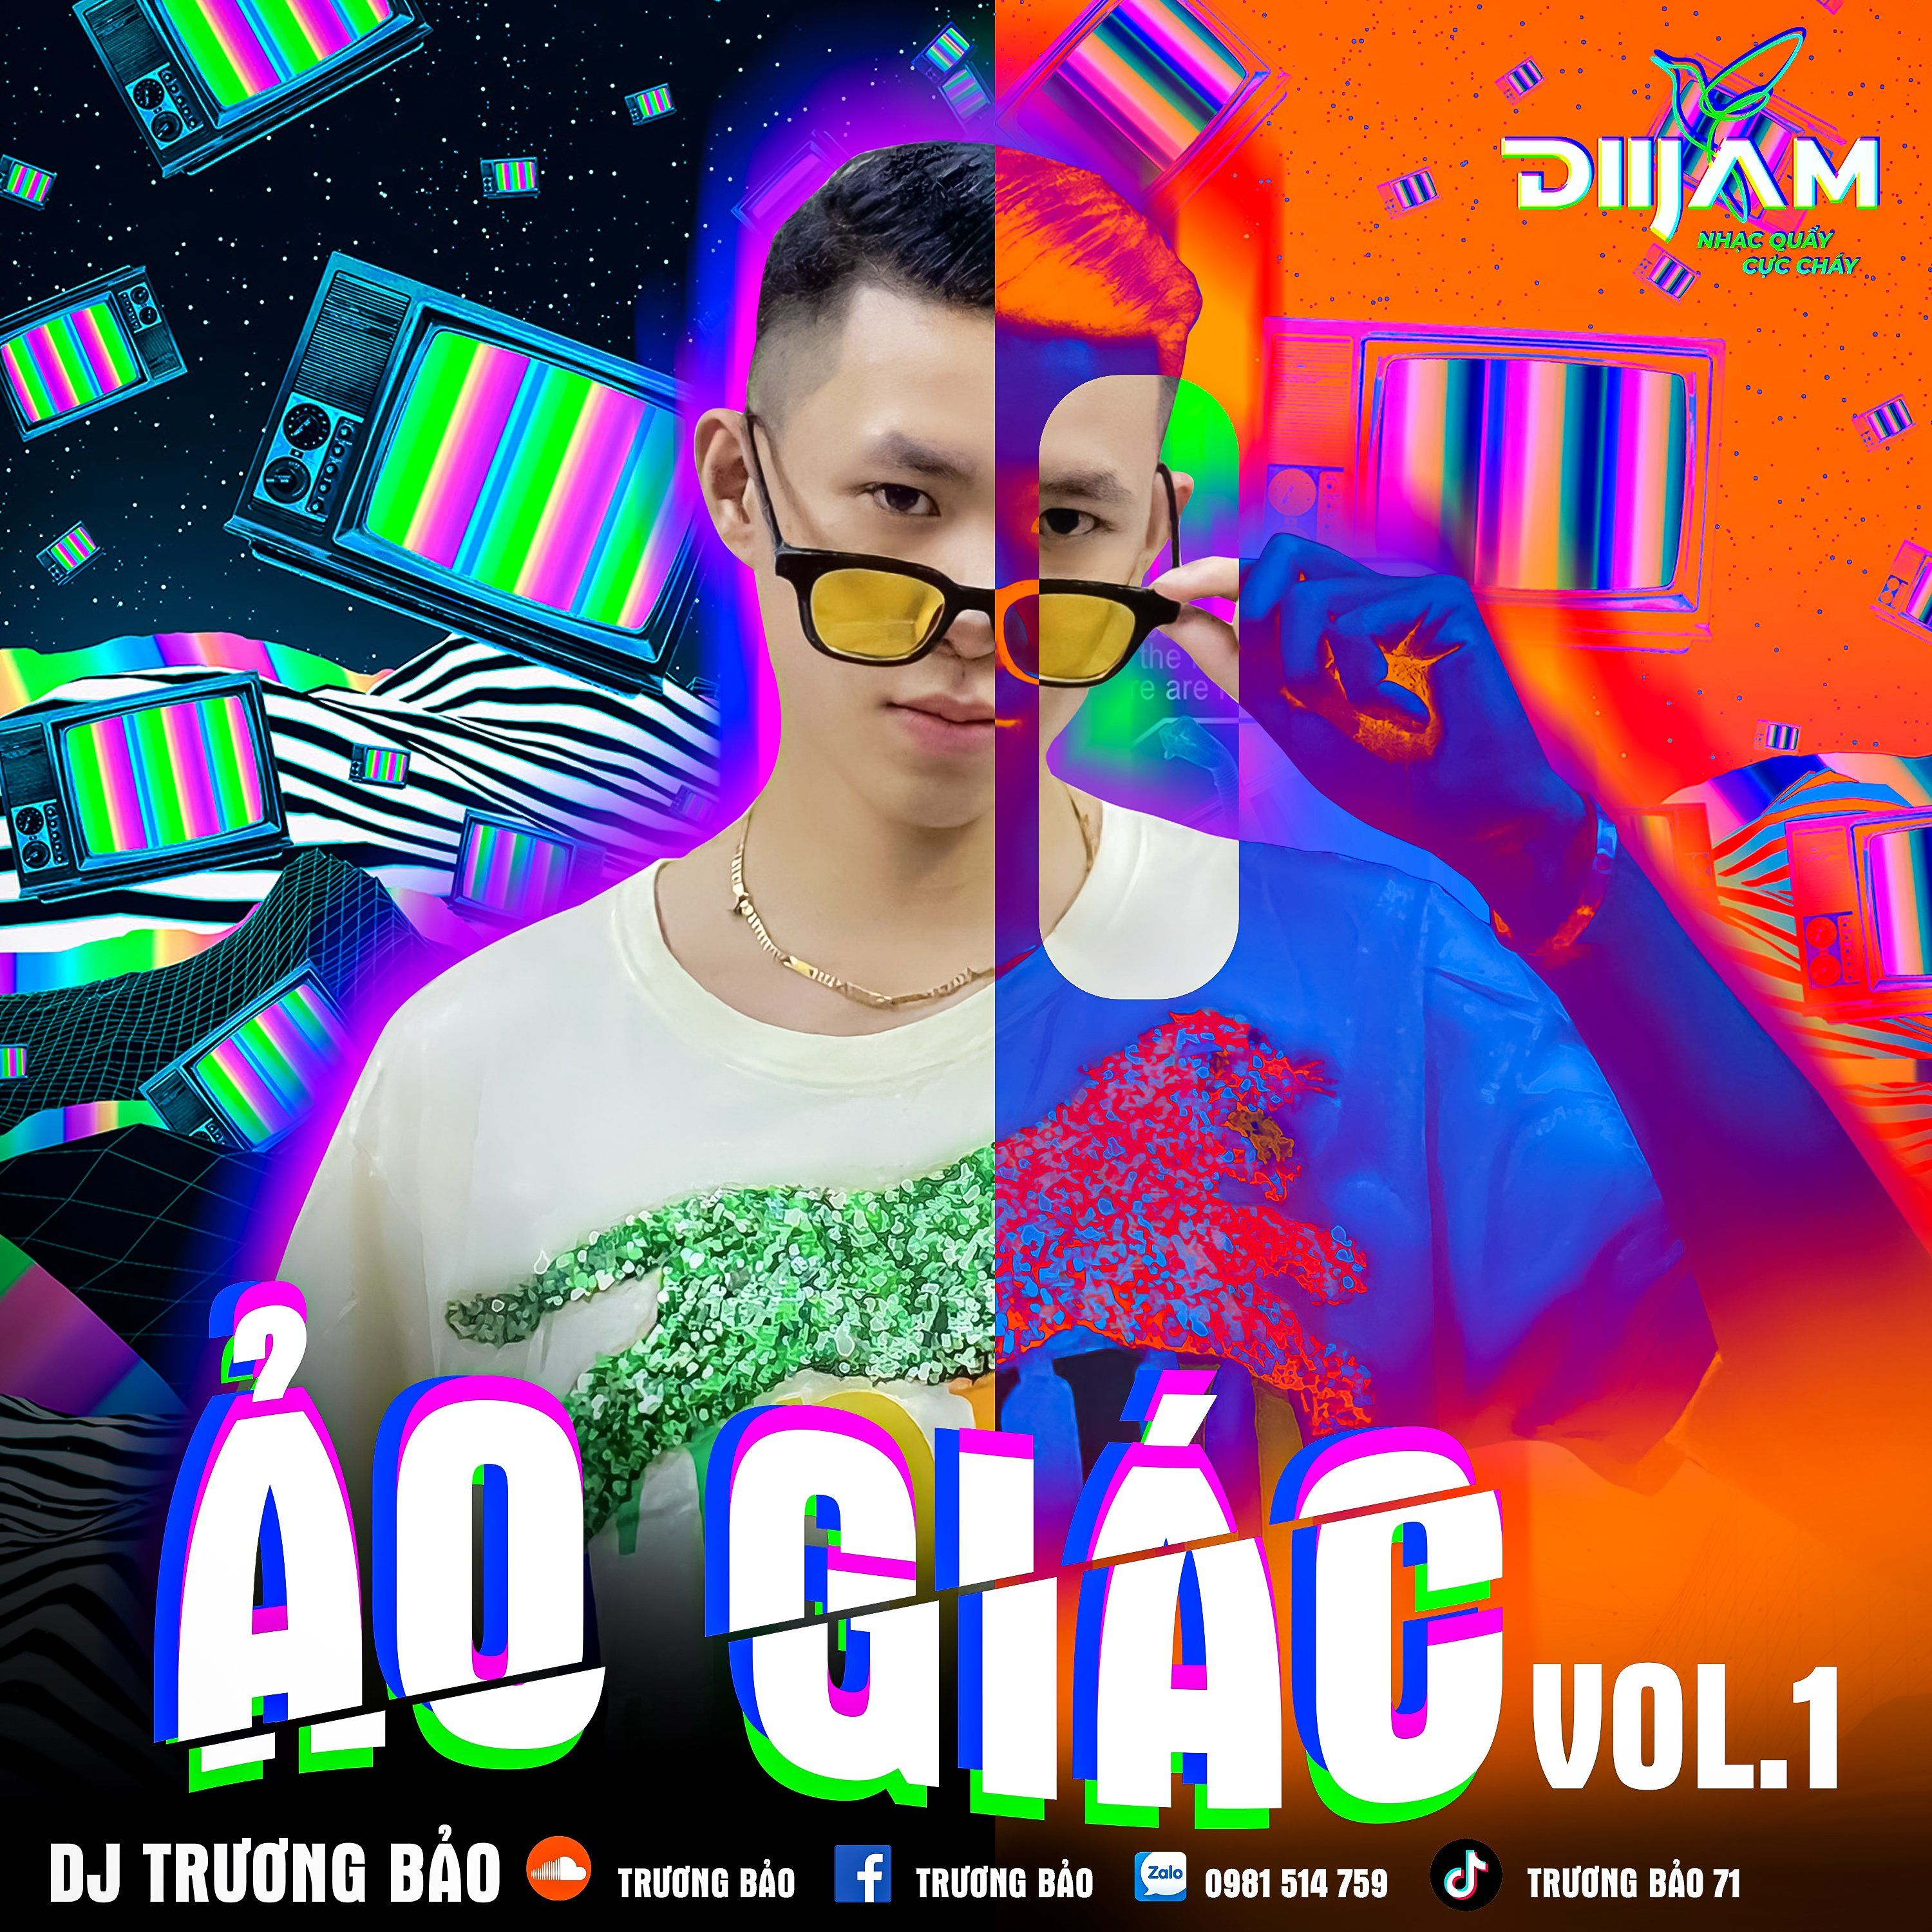 Жүктеу Ảo Giác Vol 1 - DJ Trương Bảo (Nonstop Diijam)